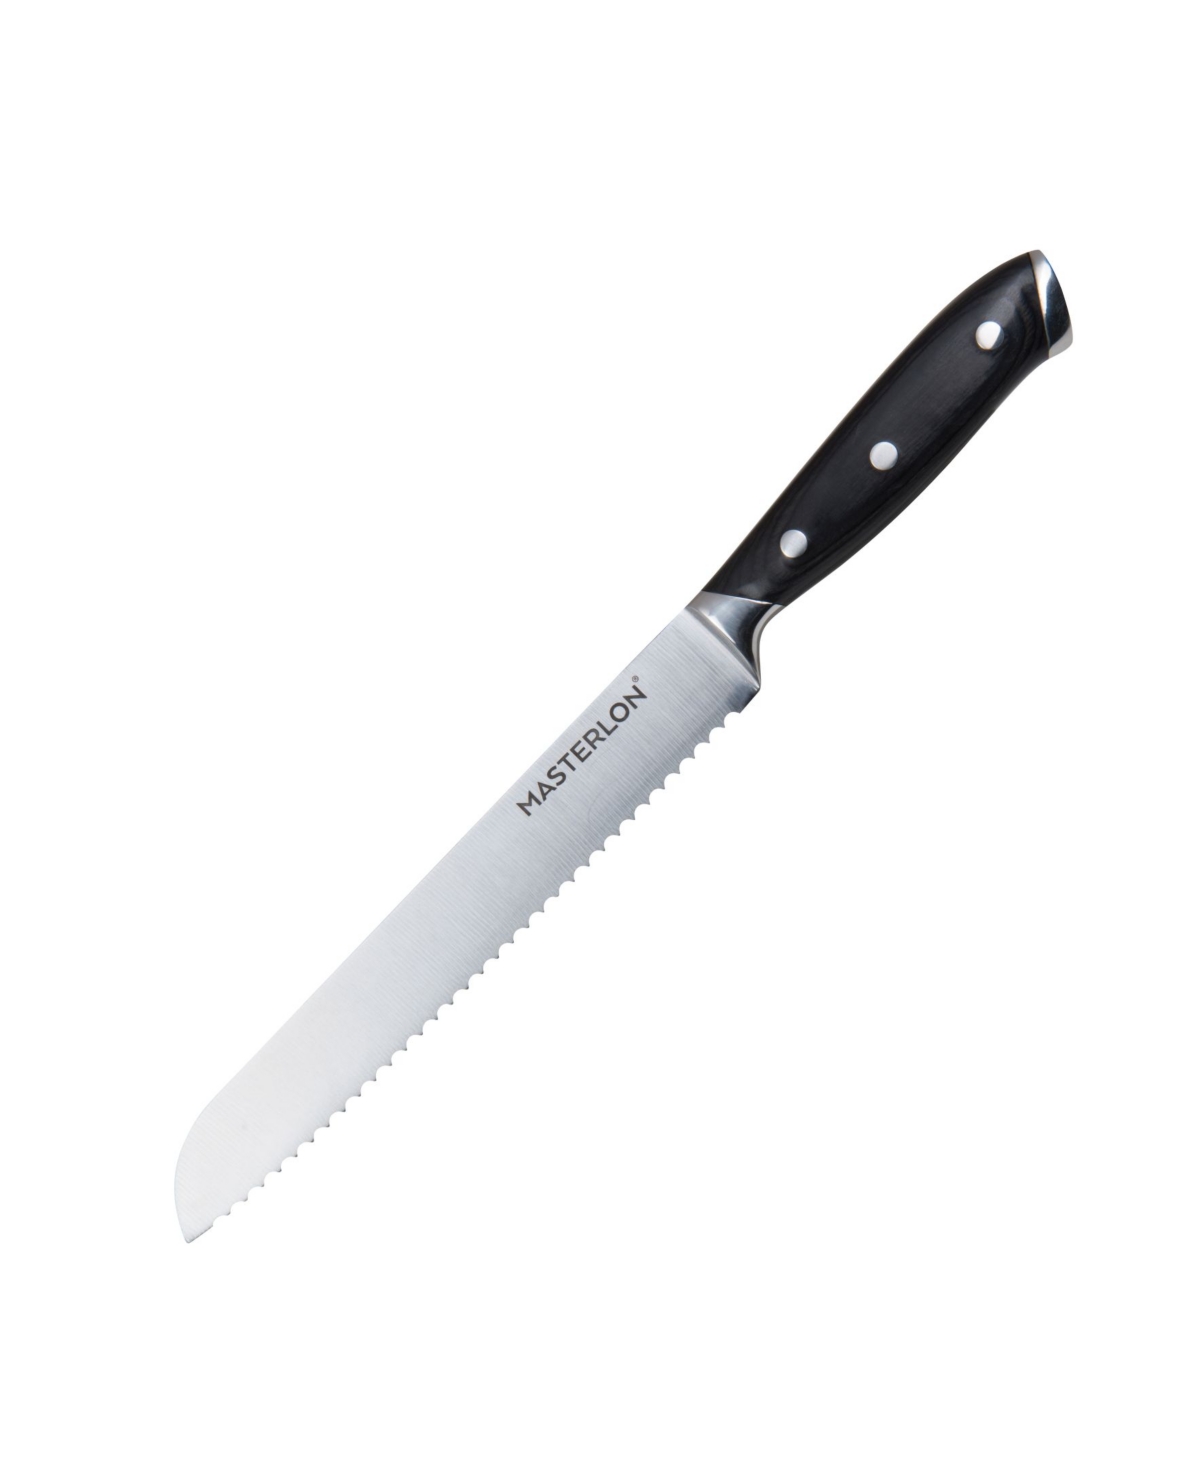 Masterpan Masterlon Triple Rivet Collection Bread Knife Stainless Steel Blade, 8"